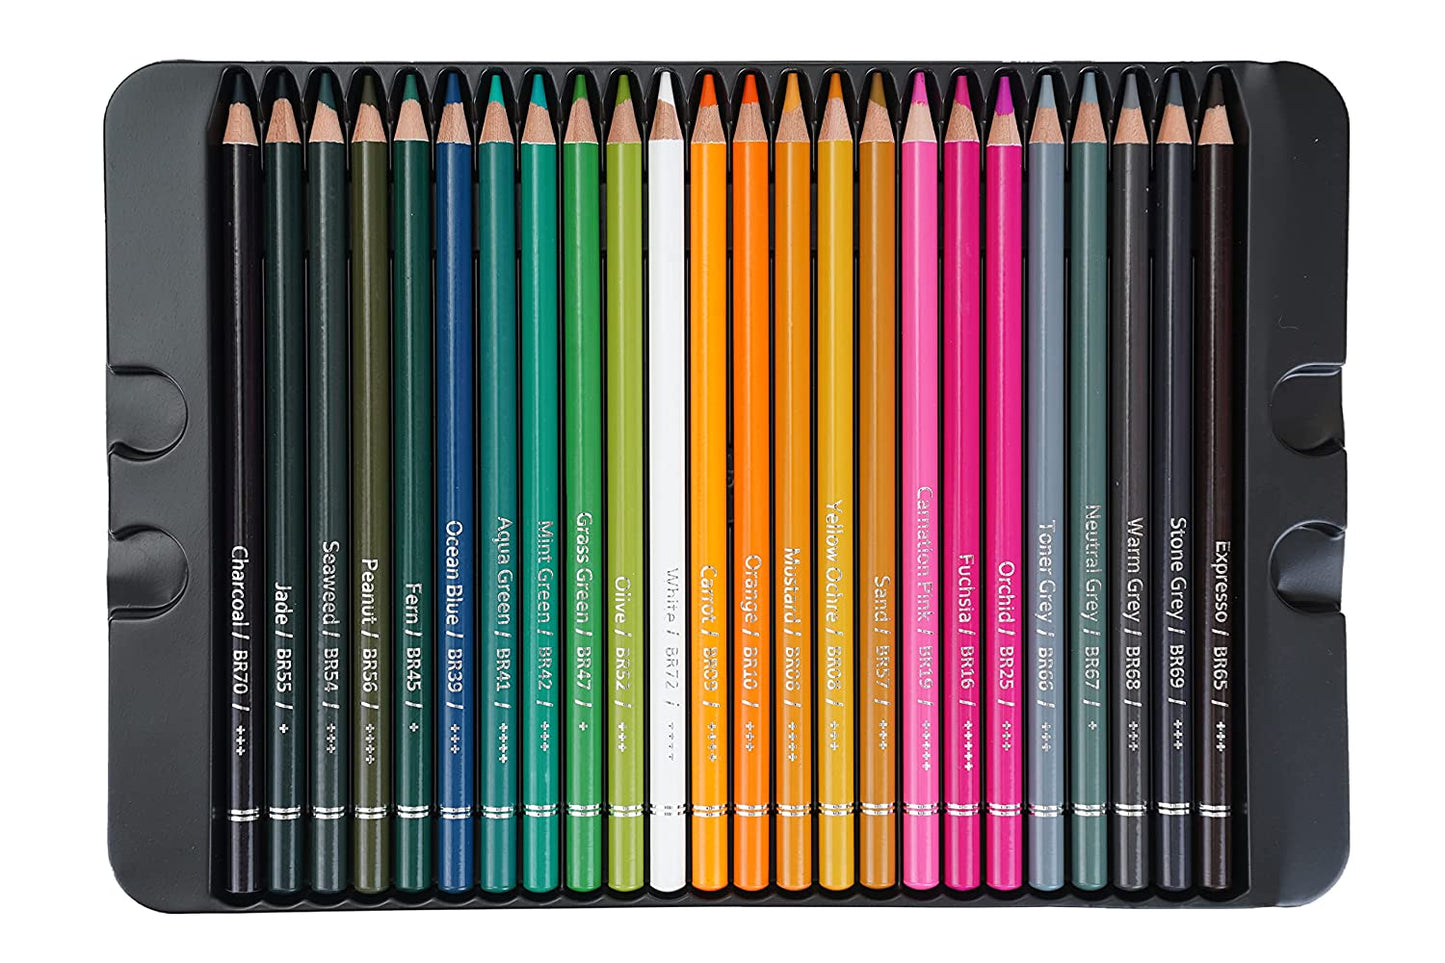 Brustro Artists' Coloured Pencil Set